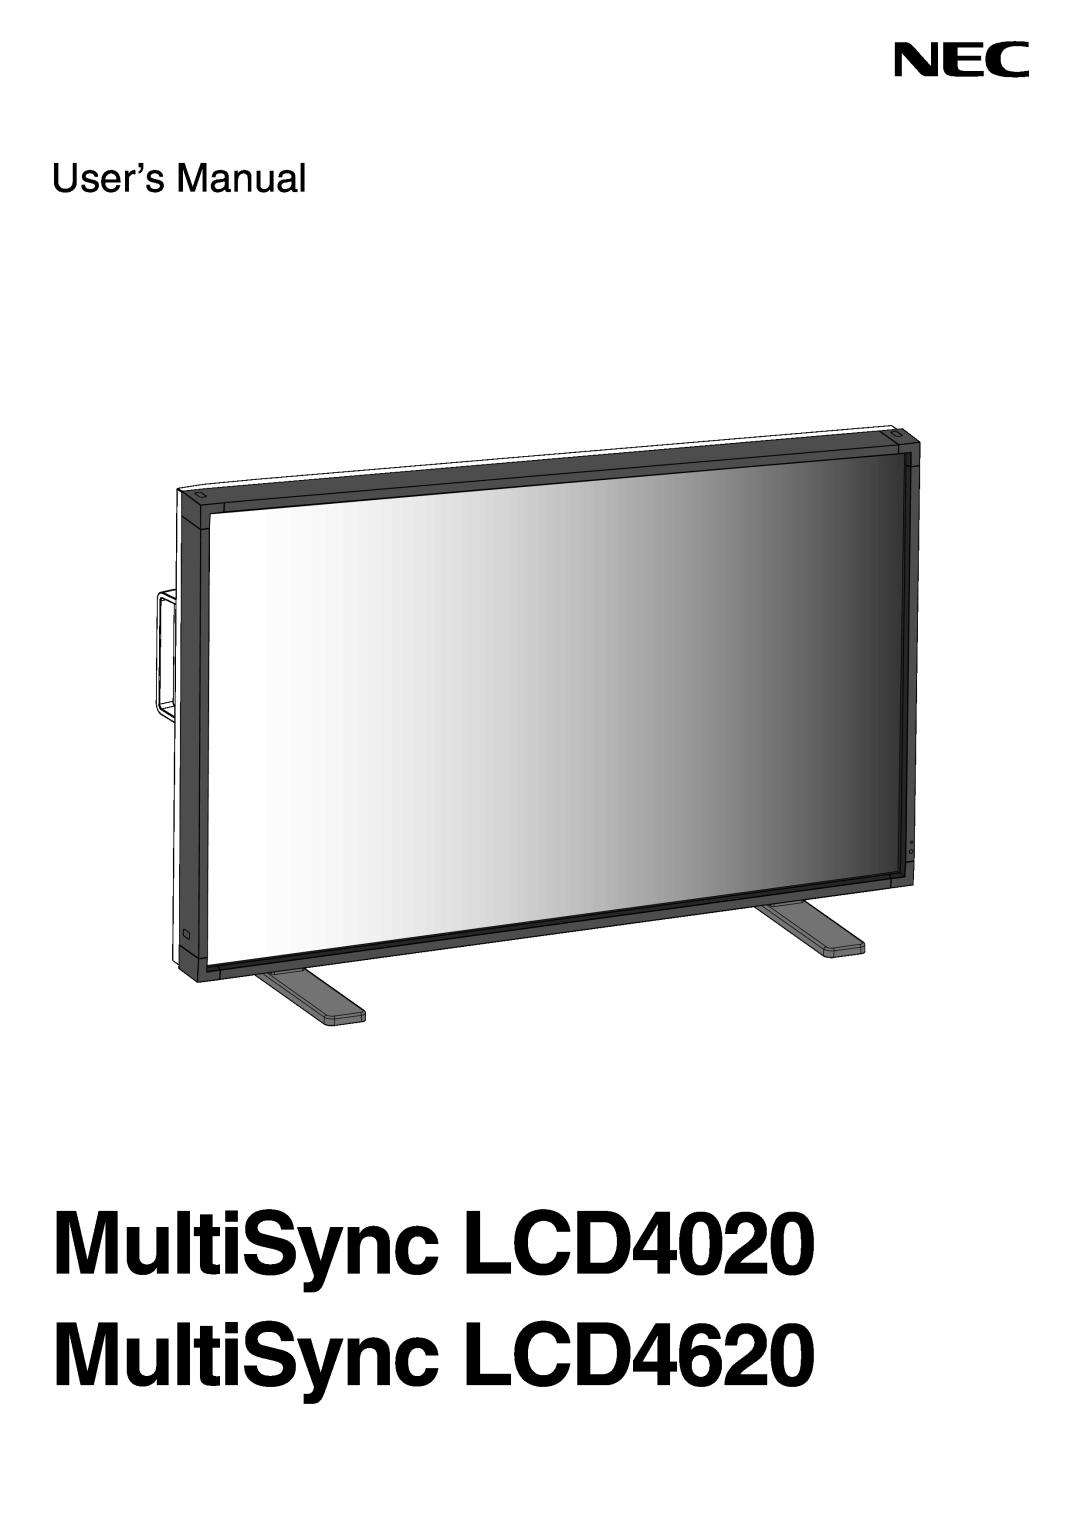 NEC LCD4020, LCD4620 user manual MultiSync LCD4020 MultiSync LCD4620, UserÕs Manual 